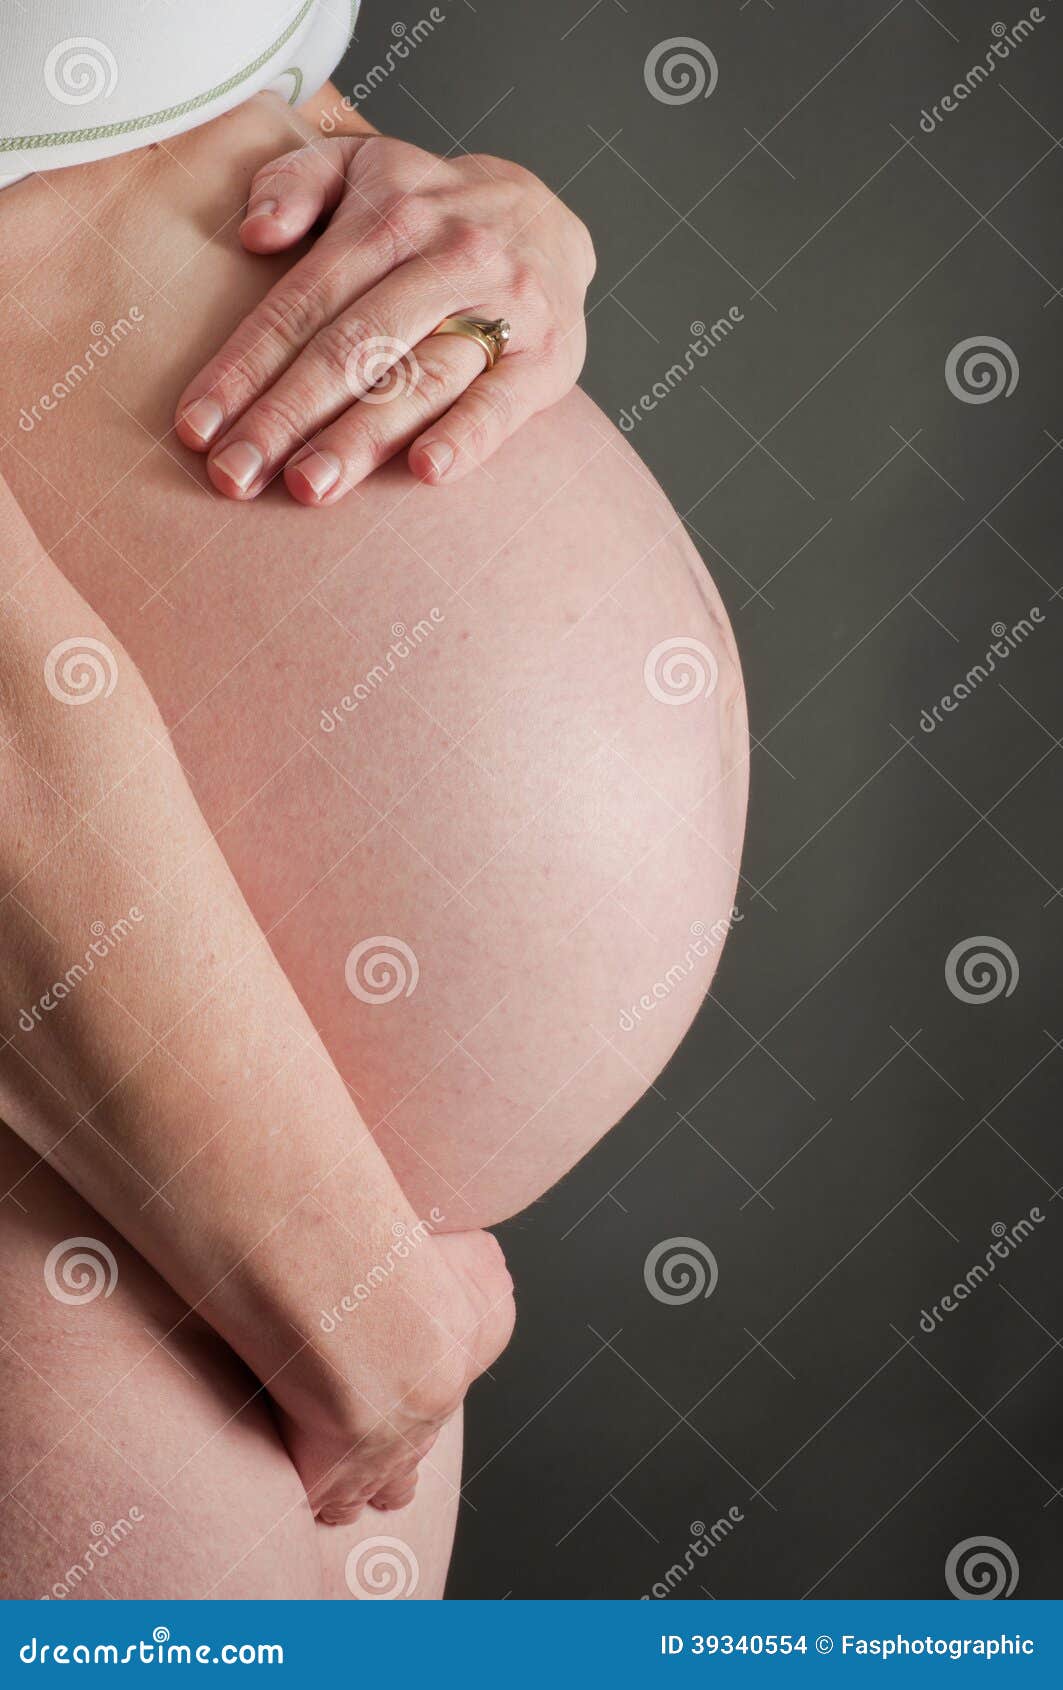 Pregnant Ready